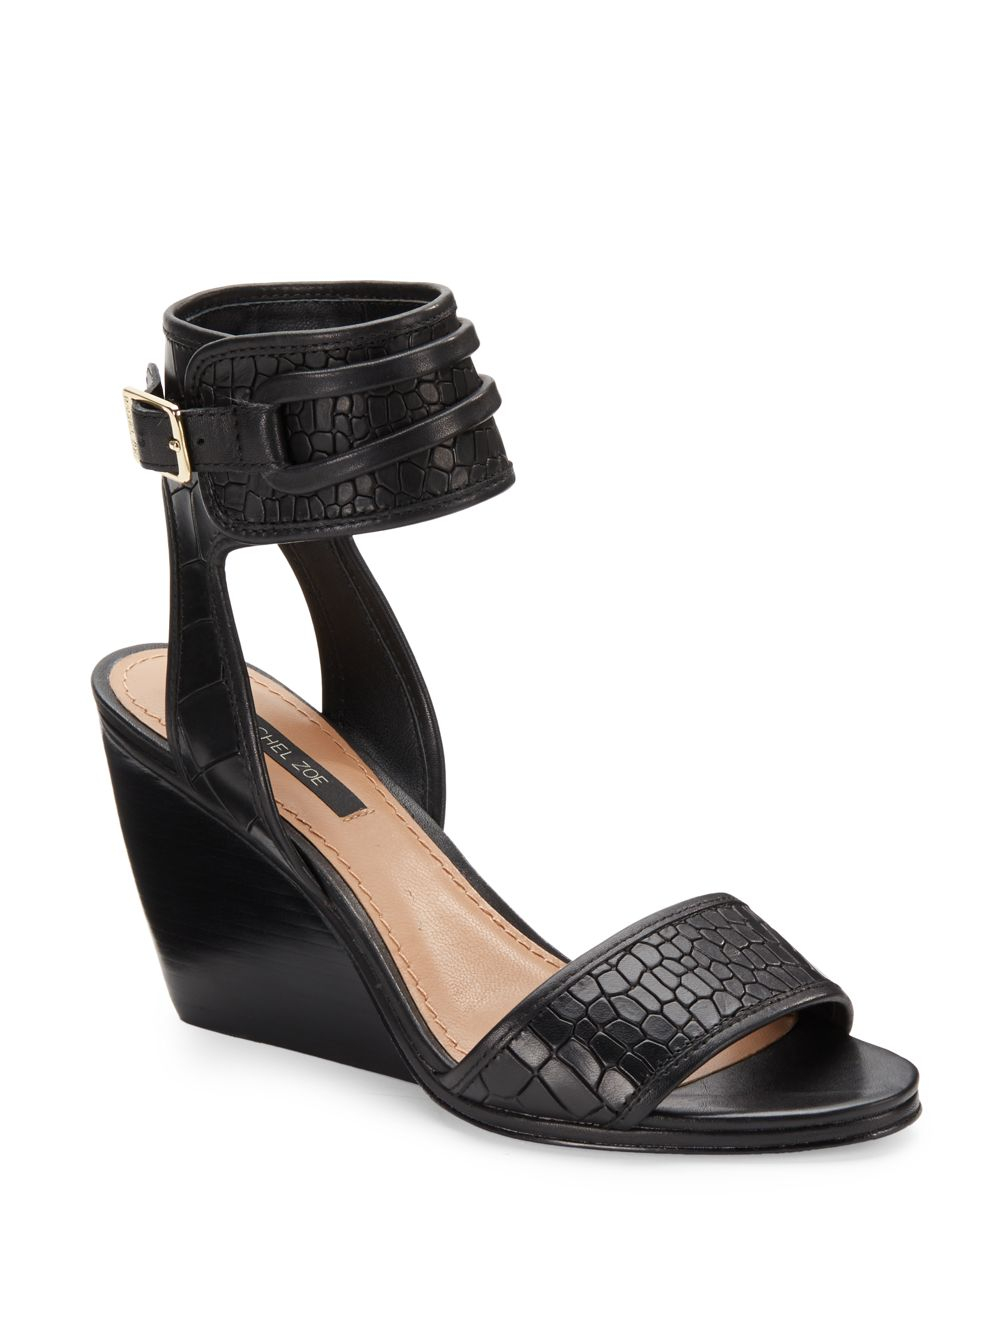 Rachel Zoe Norah Ankle-Strap Wedge Sandals in Black - Lyst